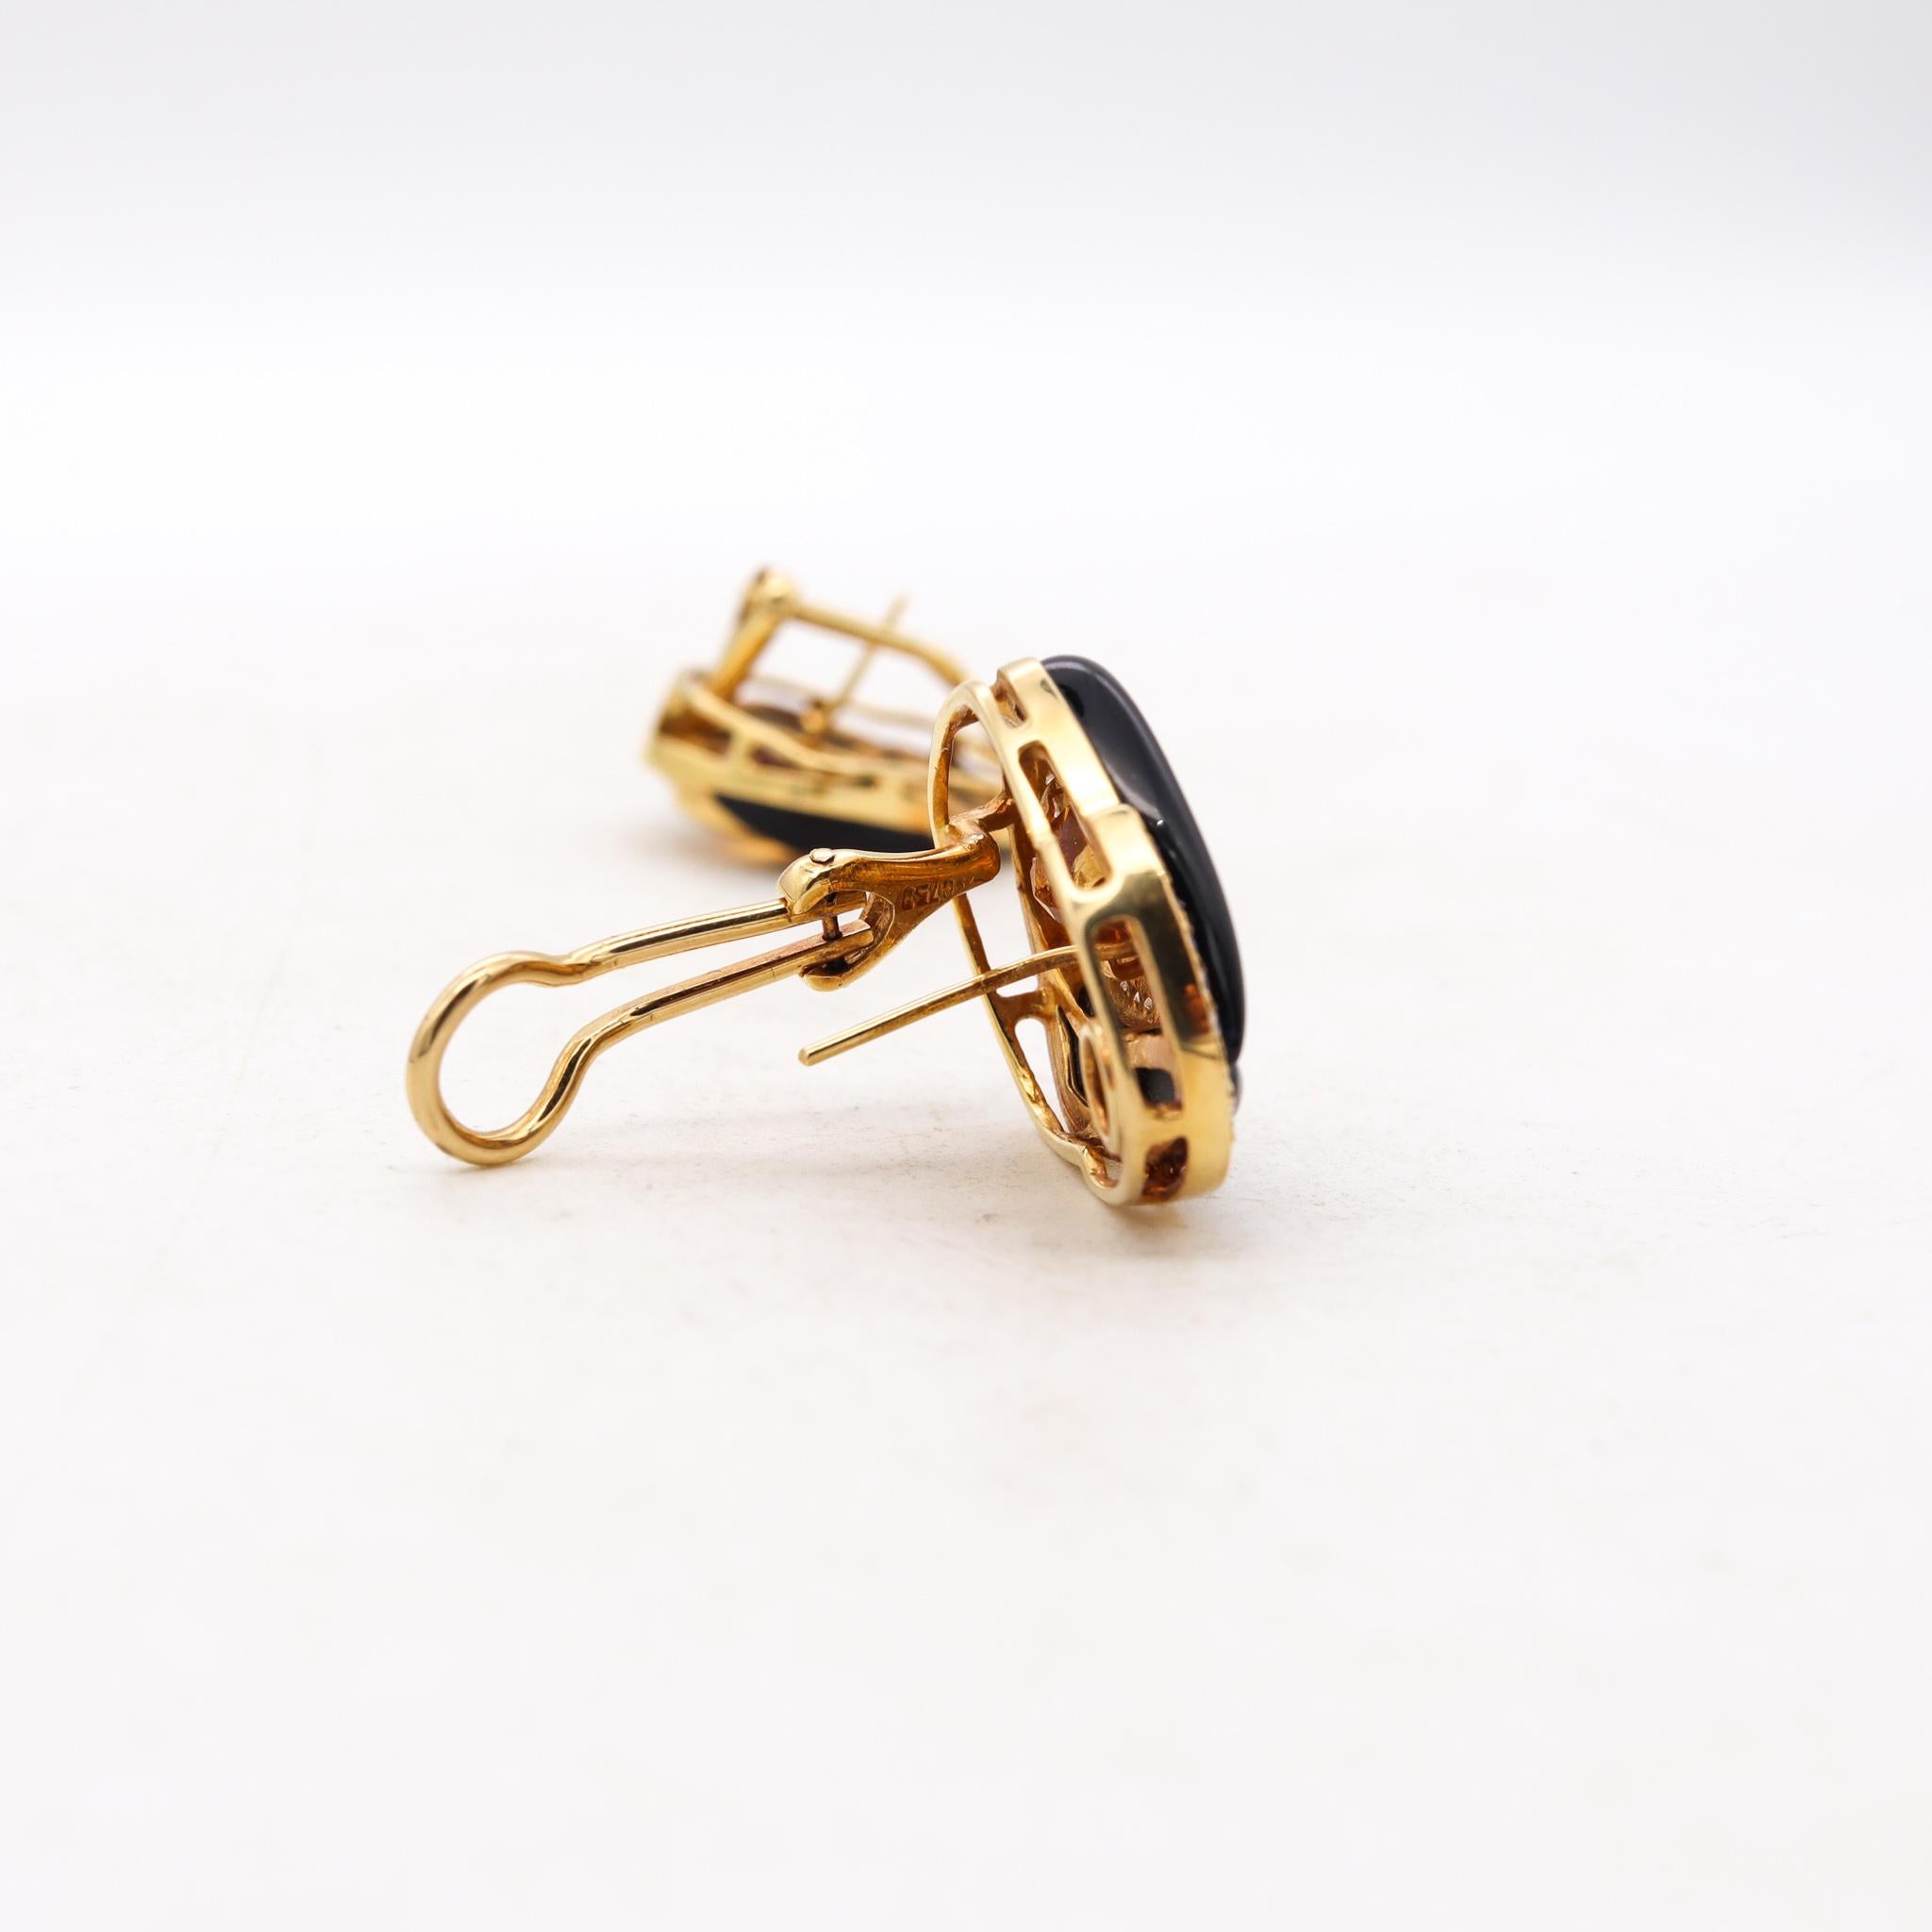 Mixed Cut Modern Italian Designer Gem Set Earrings 18Kt Gold 4.56 Ct Diamond And Gemstones